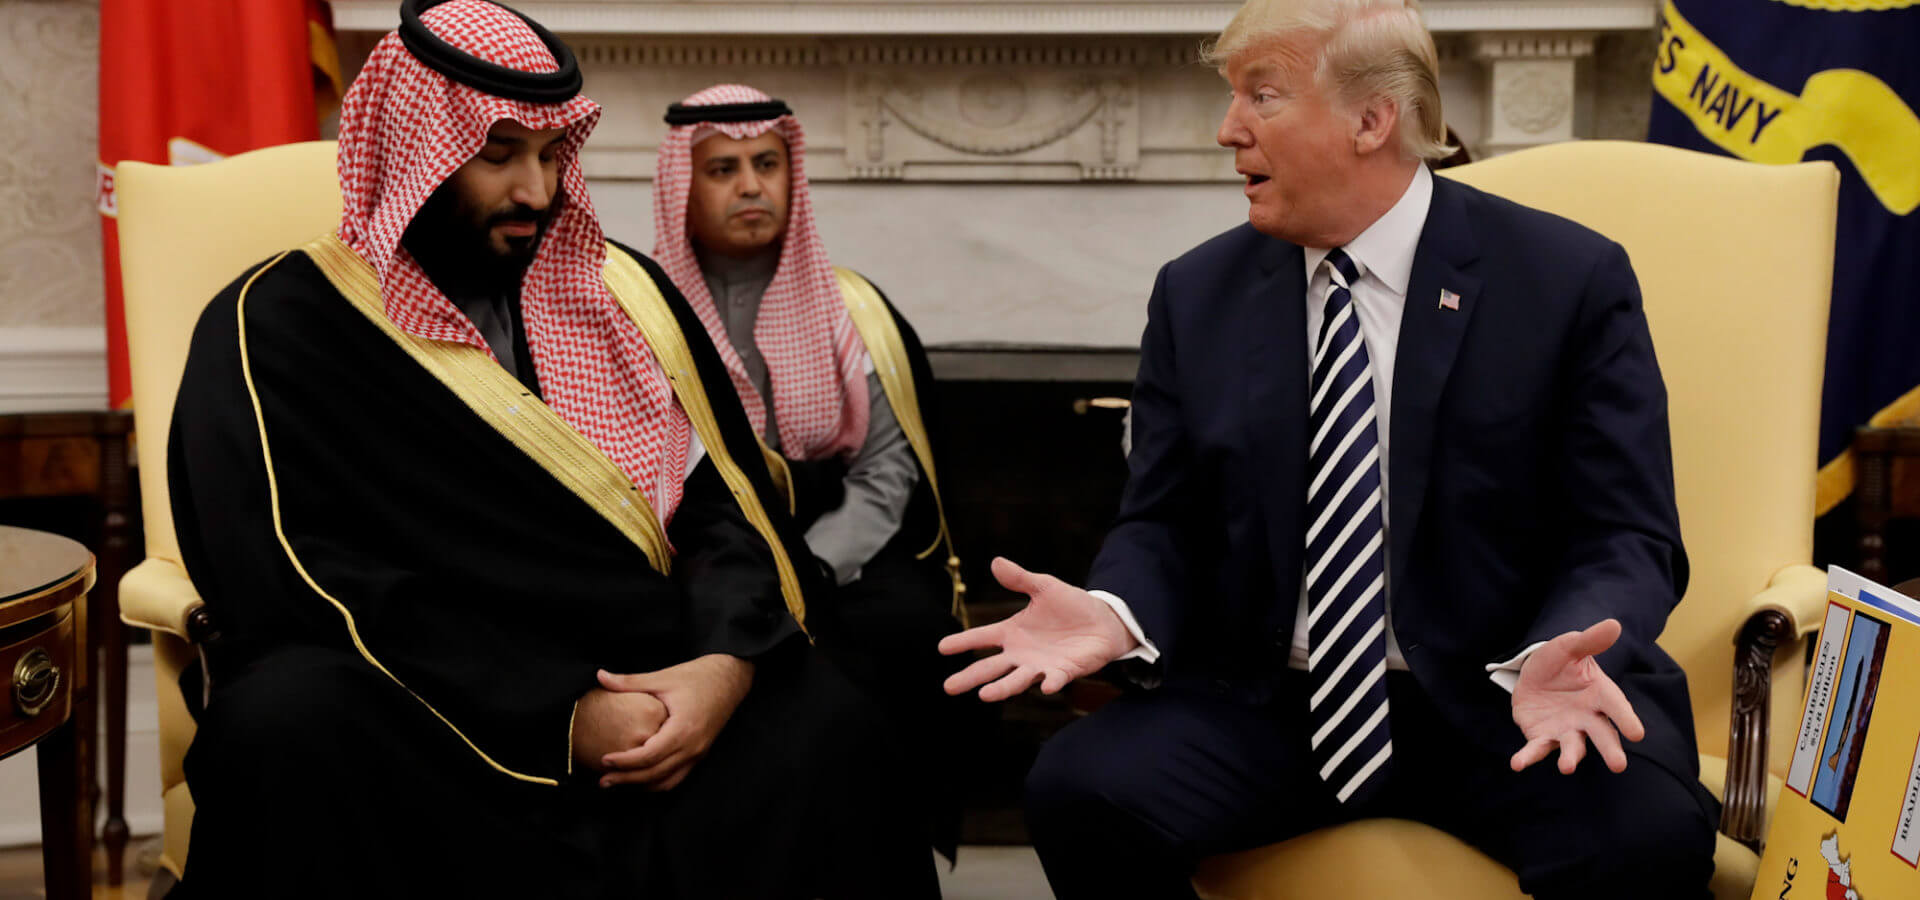 EE.UU. aplica política exterior de doble rasero con Arabia Saudita